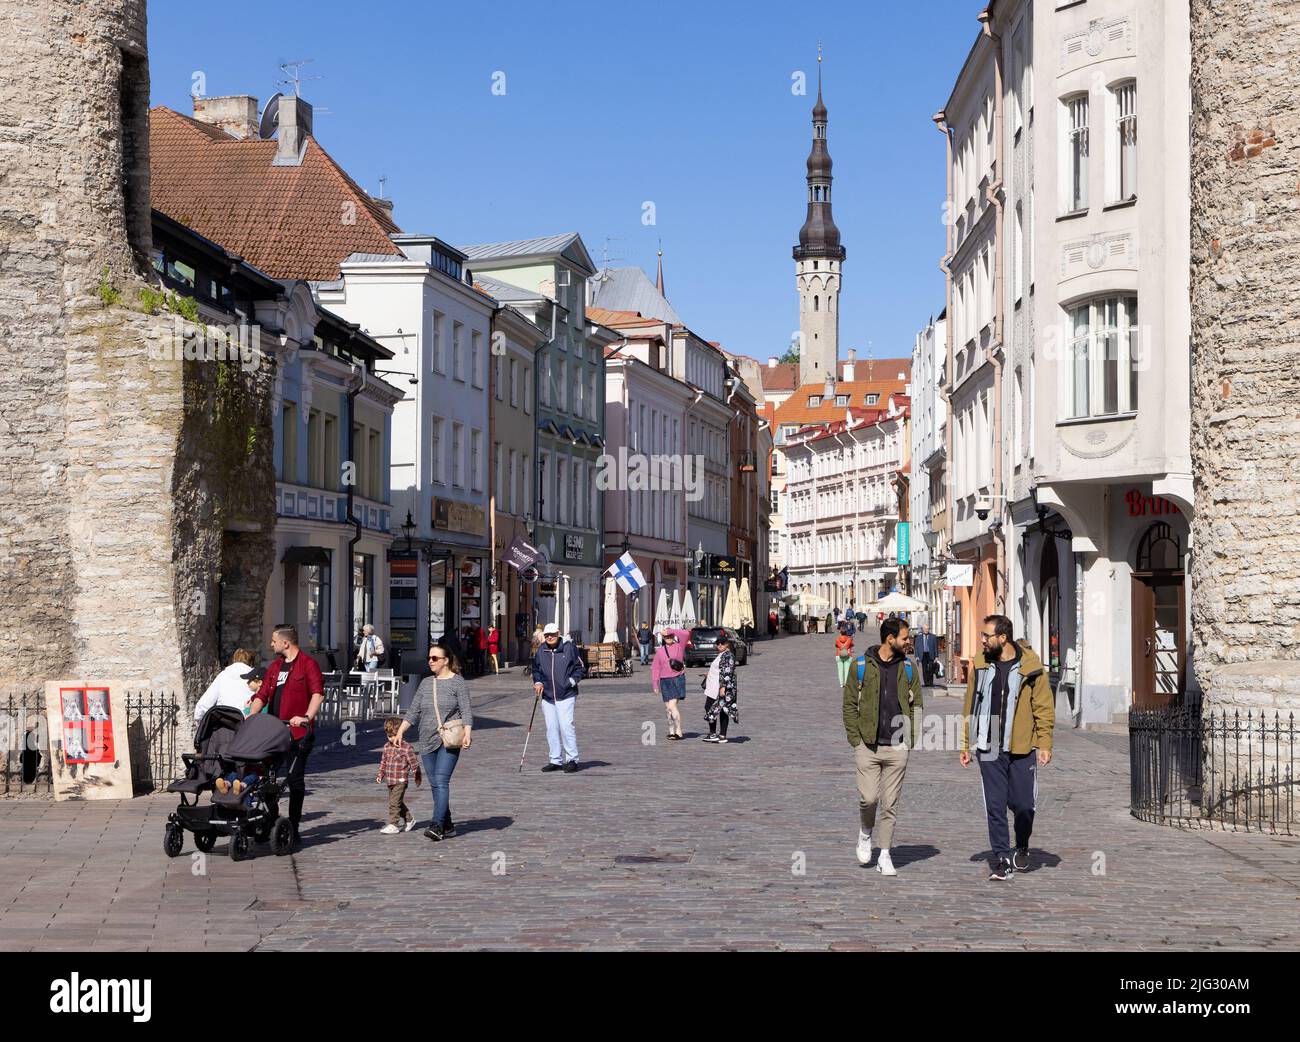 Tallinn Old Town cobbled street scene in summer, with medieval buildings and people; Tallinn Estonia Europe. Estonia travel. Stock Photo